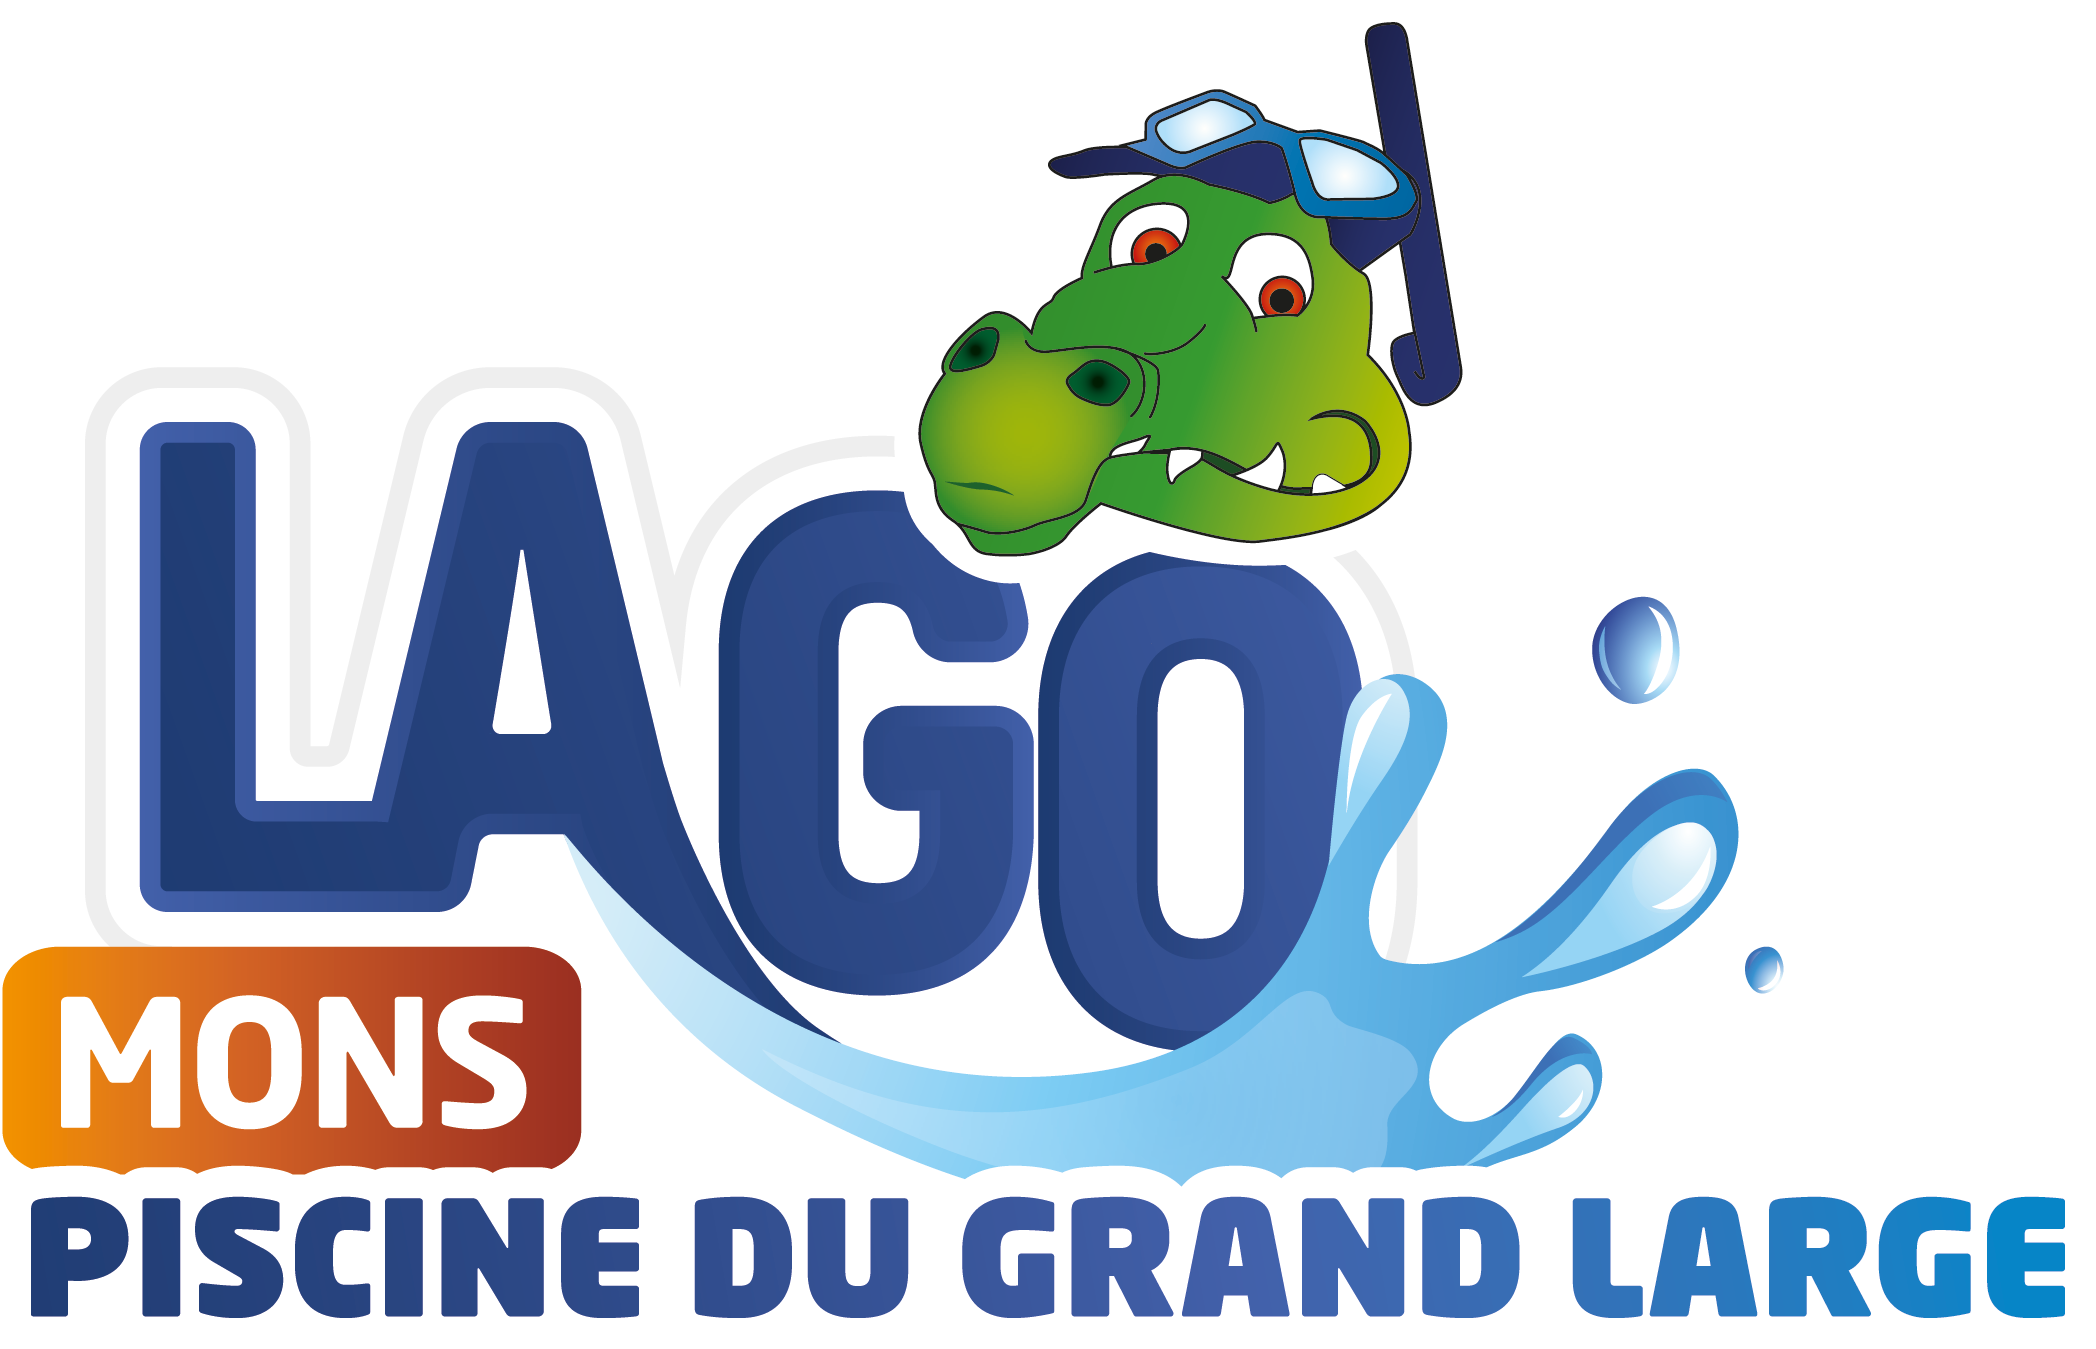 LAGO Mons, Zwembad van le Grand Large